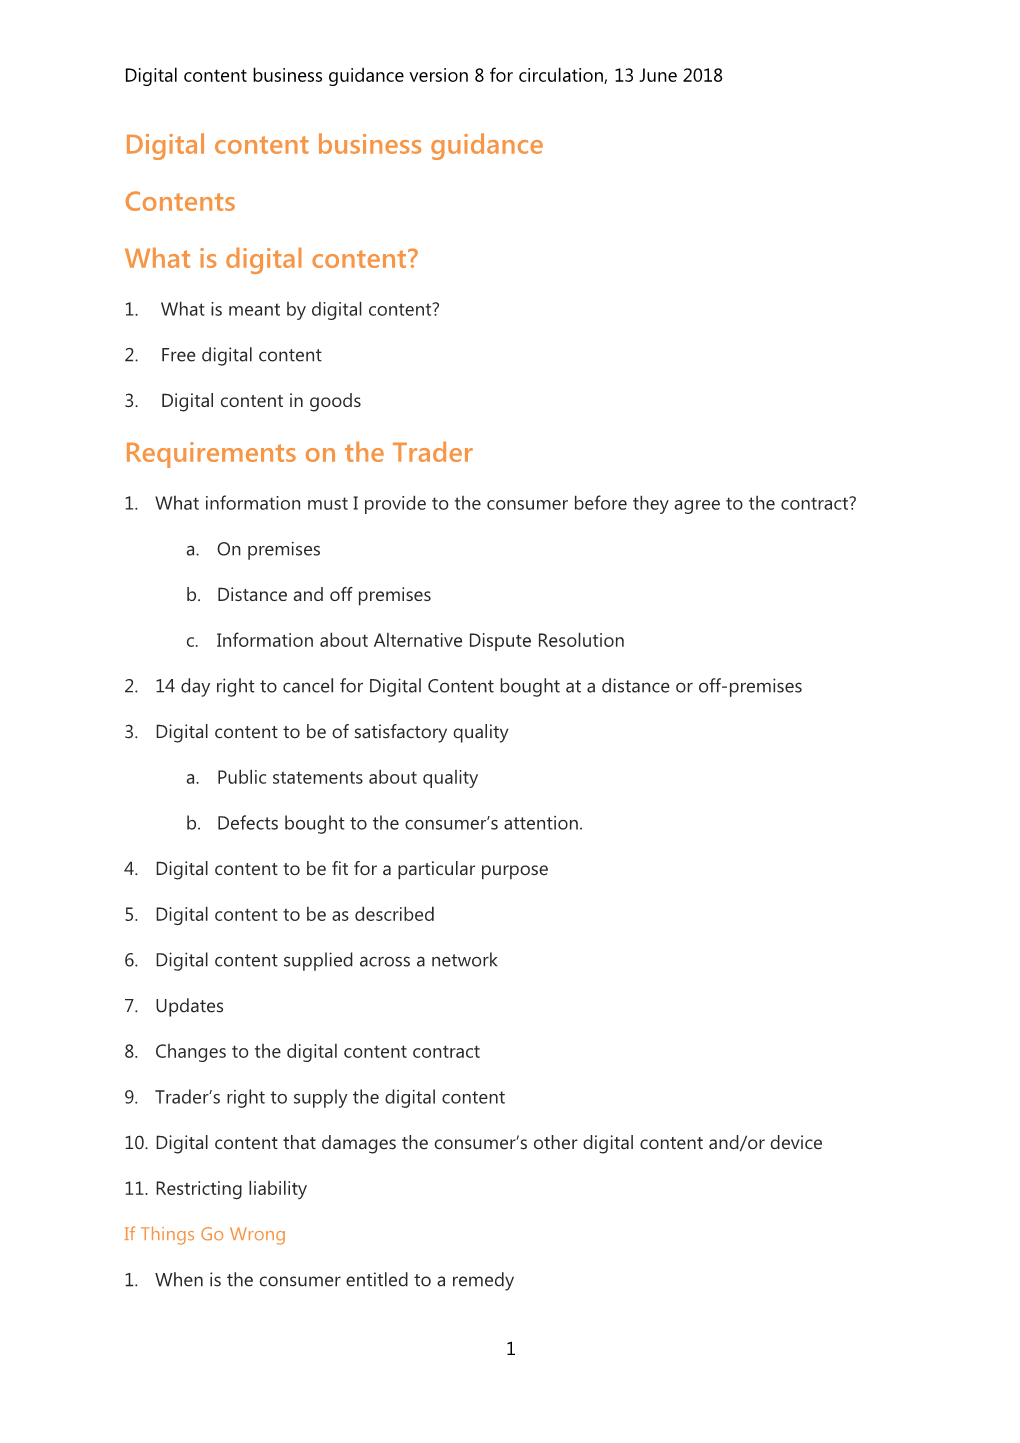 Digital Content Business Guidance Version 8 for Circulation, 19 December 2014